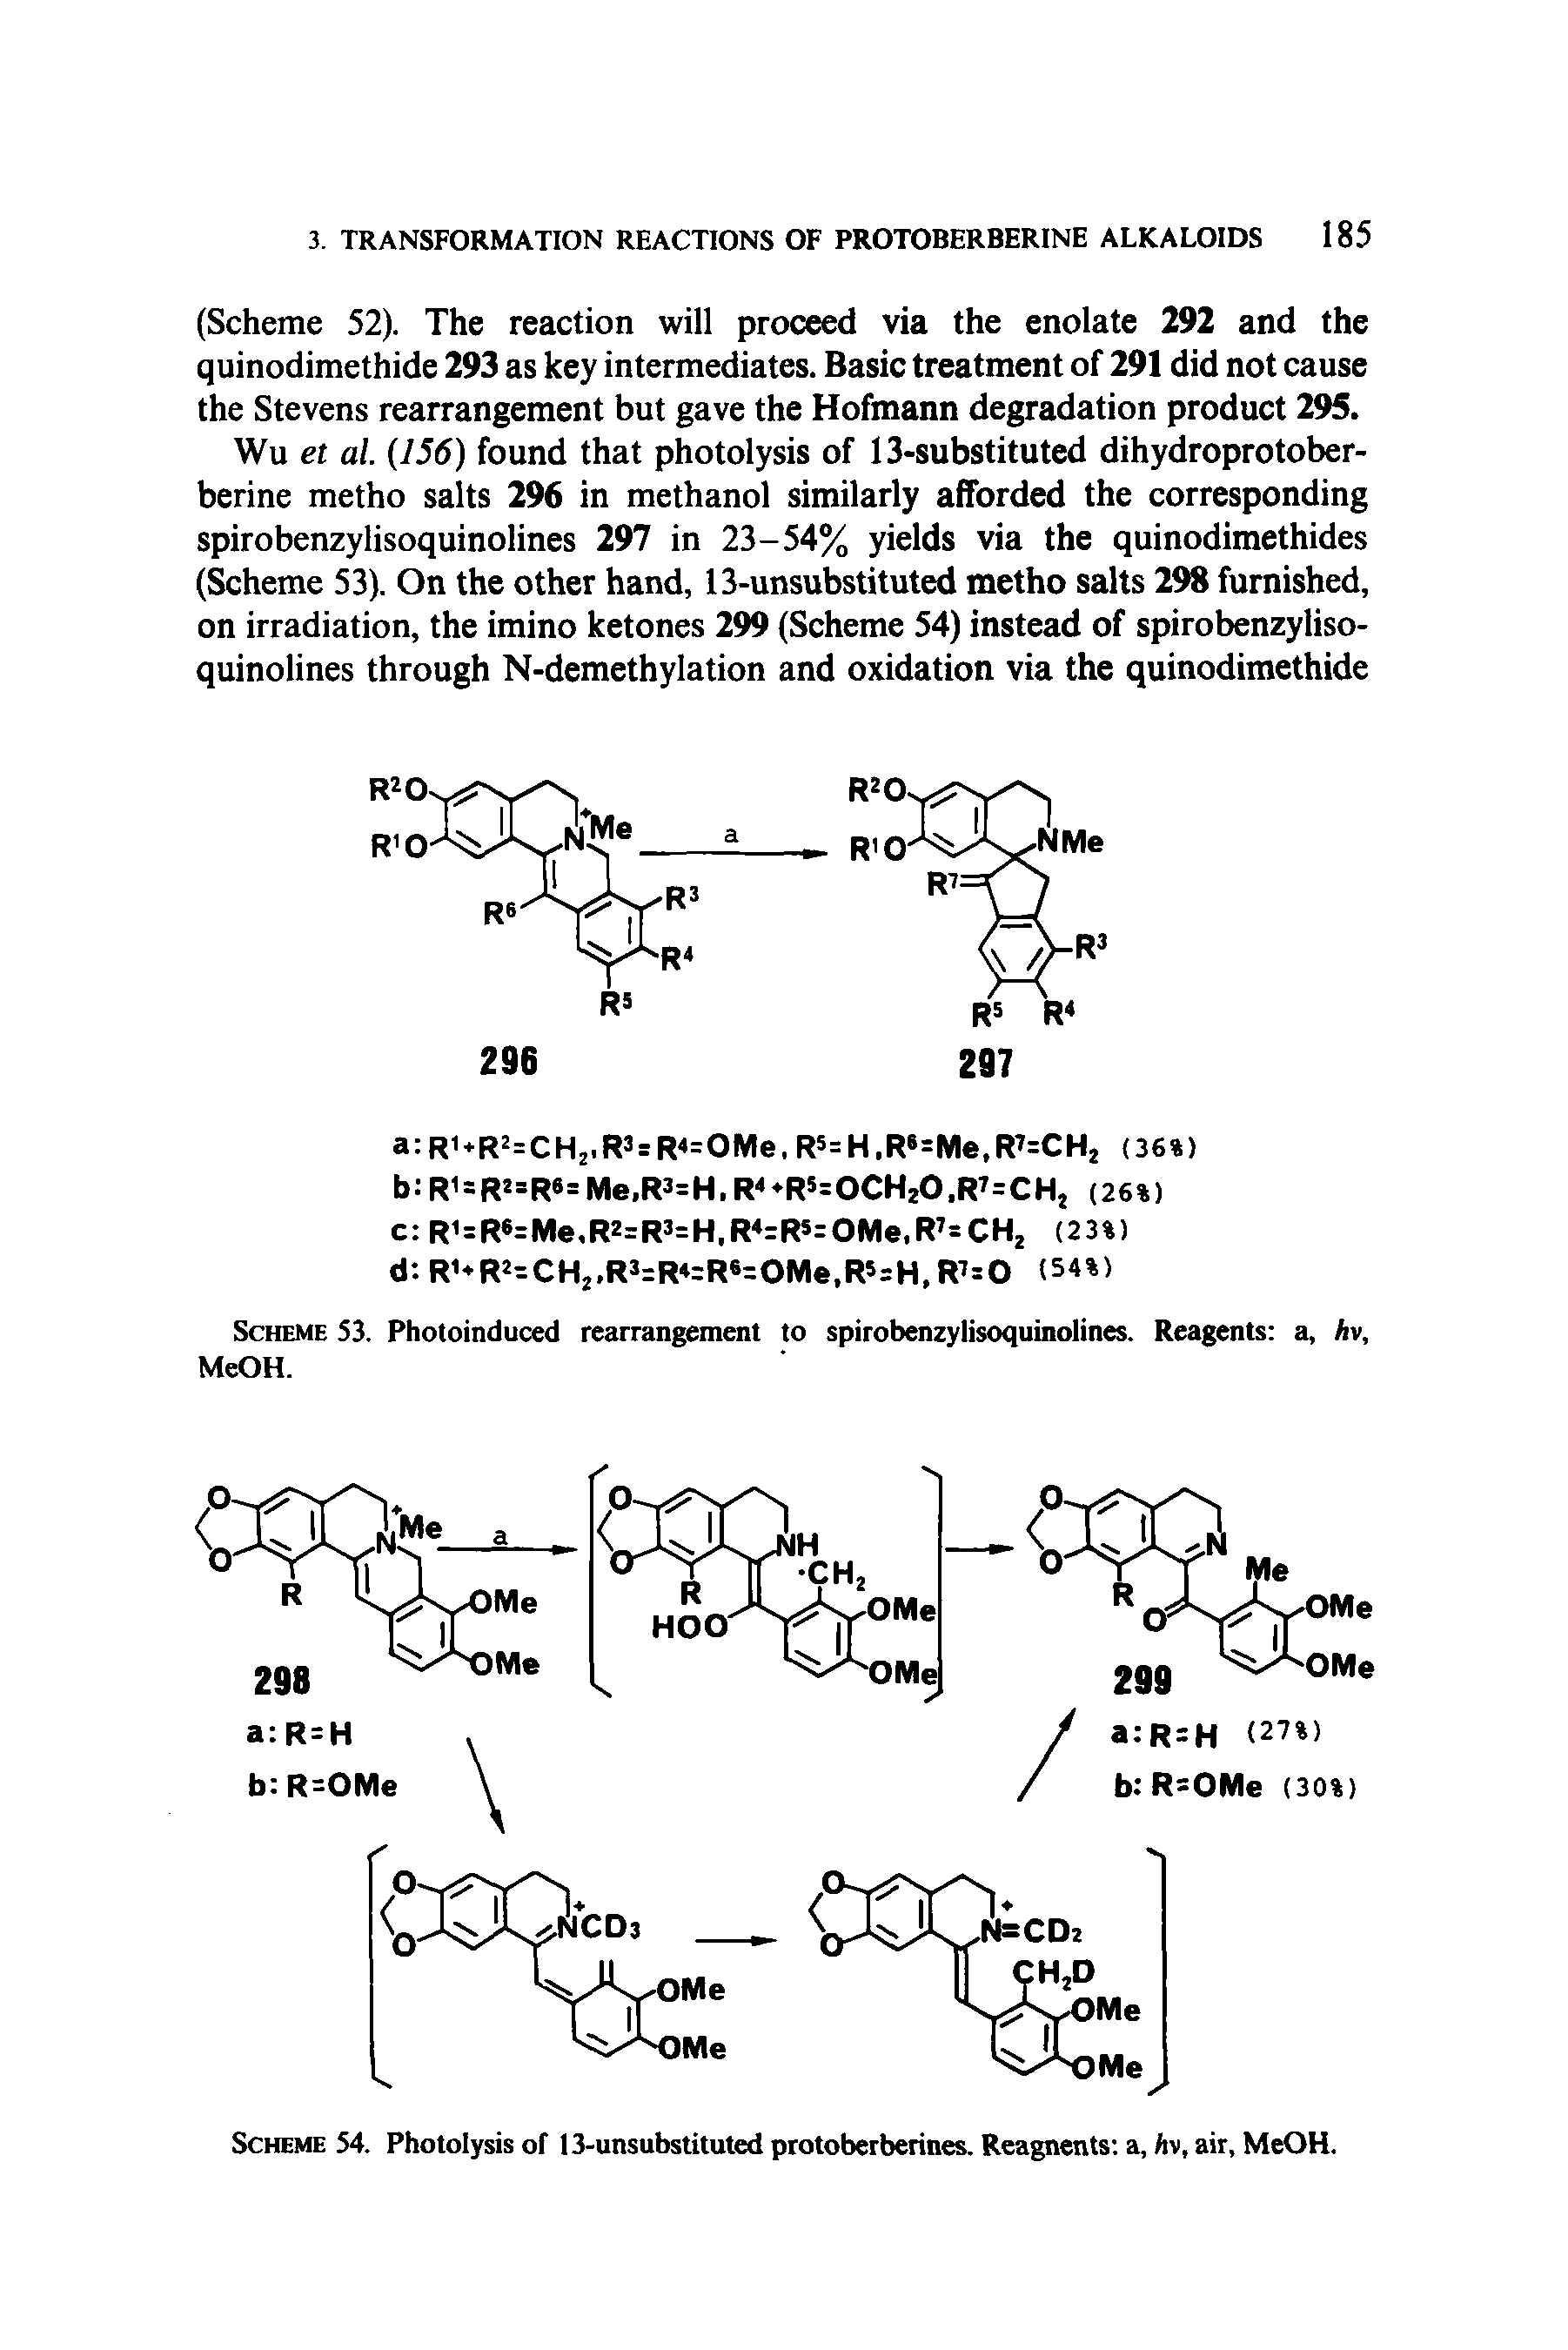 Scheme S3. Photoinduced rearrangement to spirobenzylisoquinolines. Reagents a, hv, MeOH.